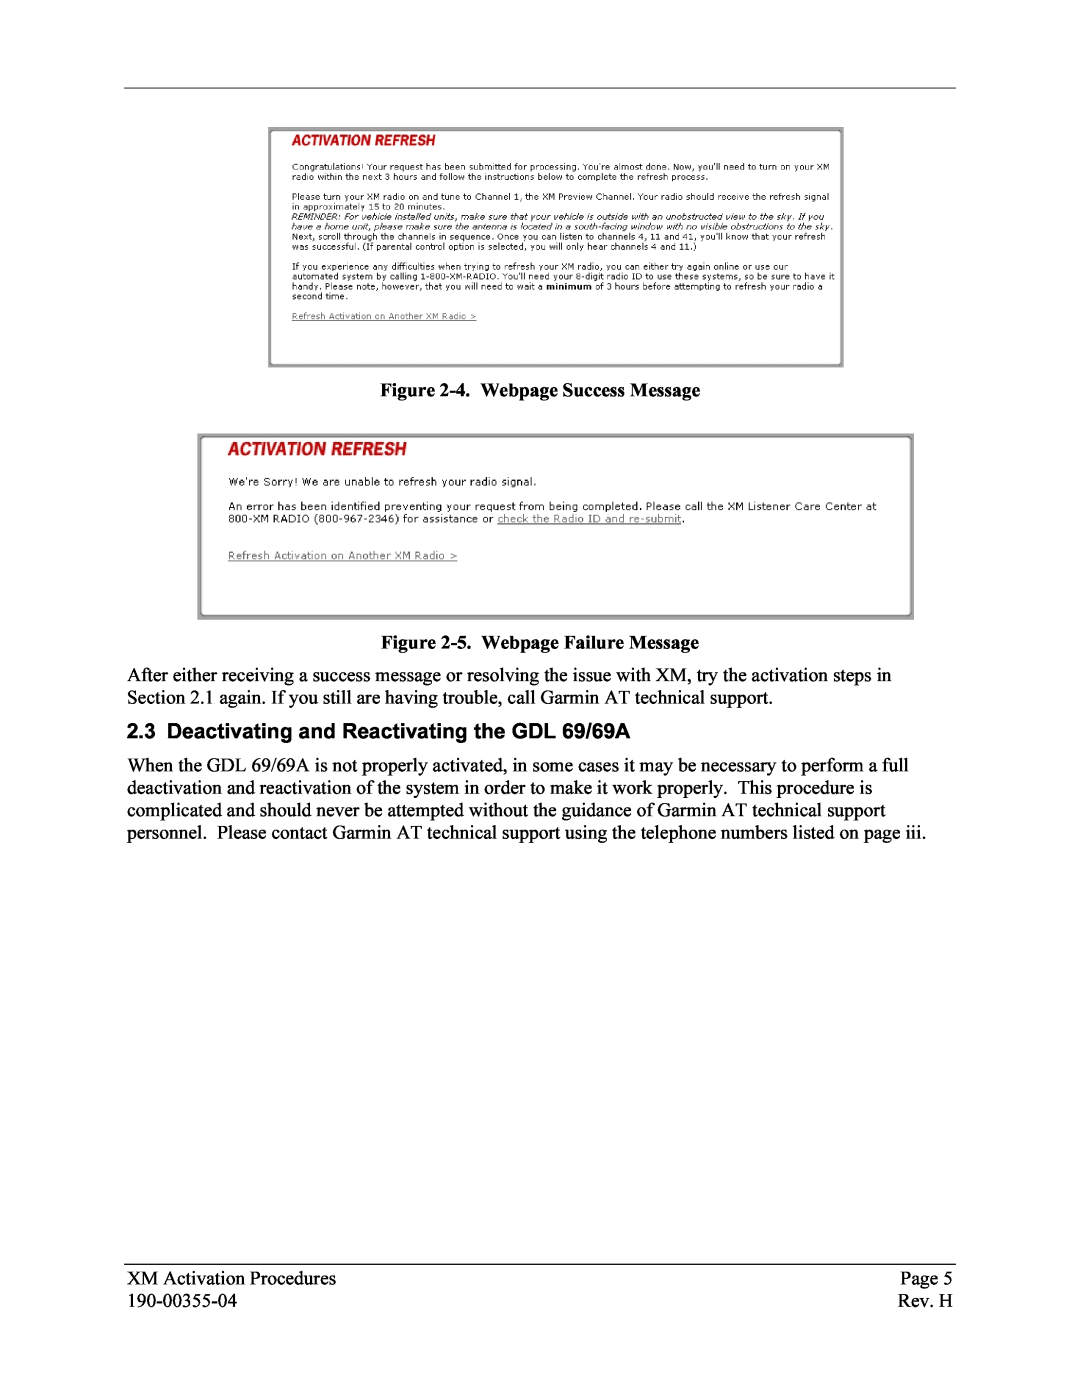 Garmin GDL 69 manual 4.Webpage Success Message 